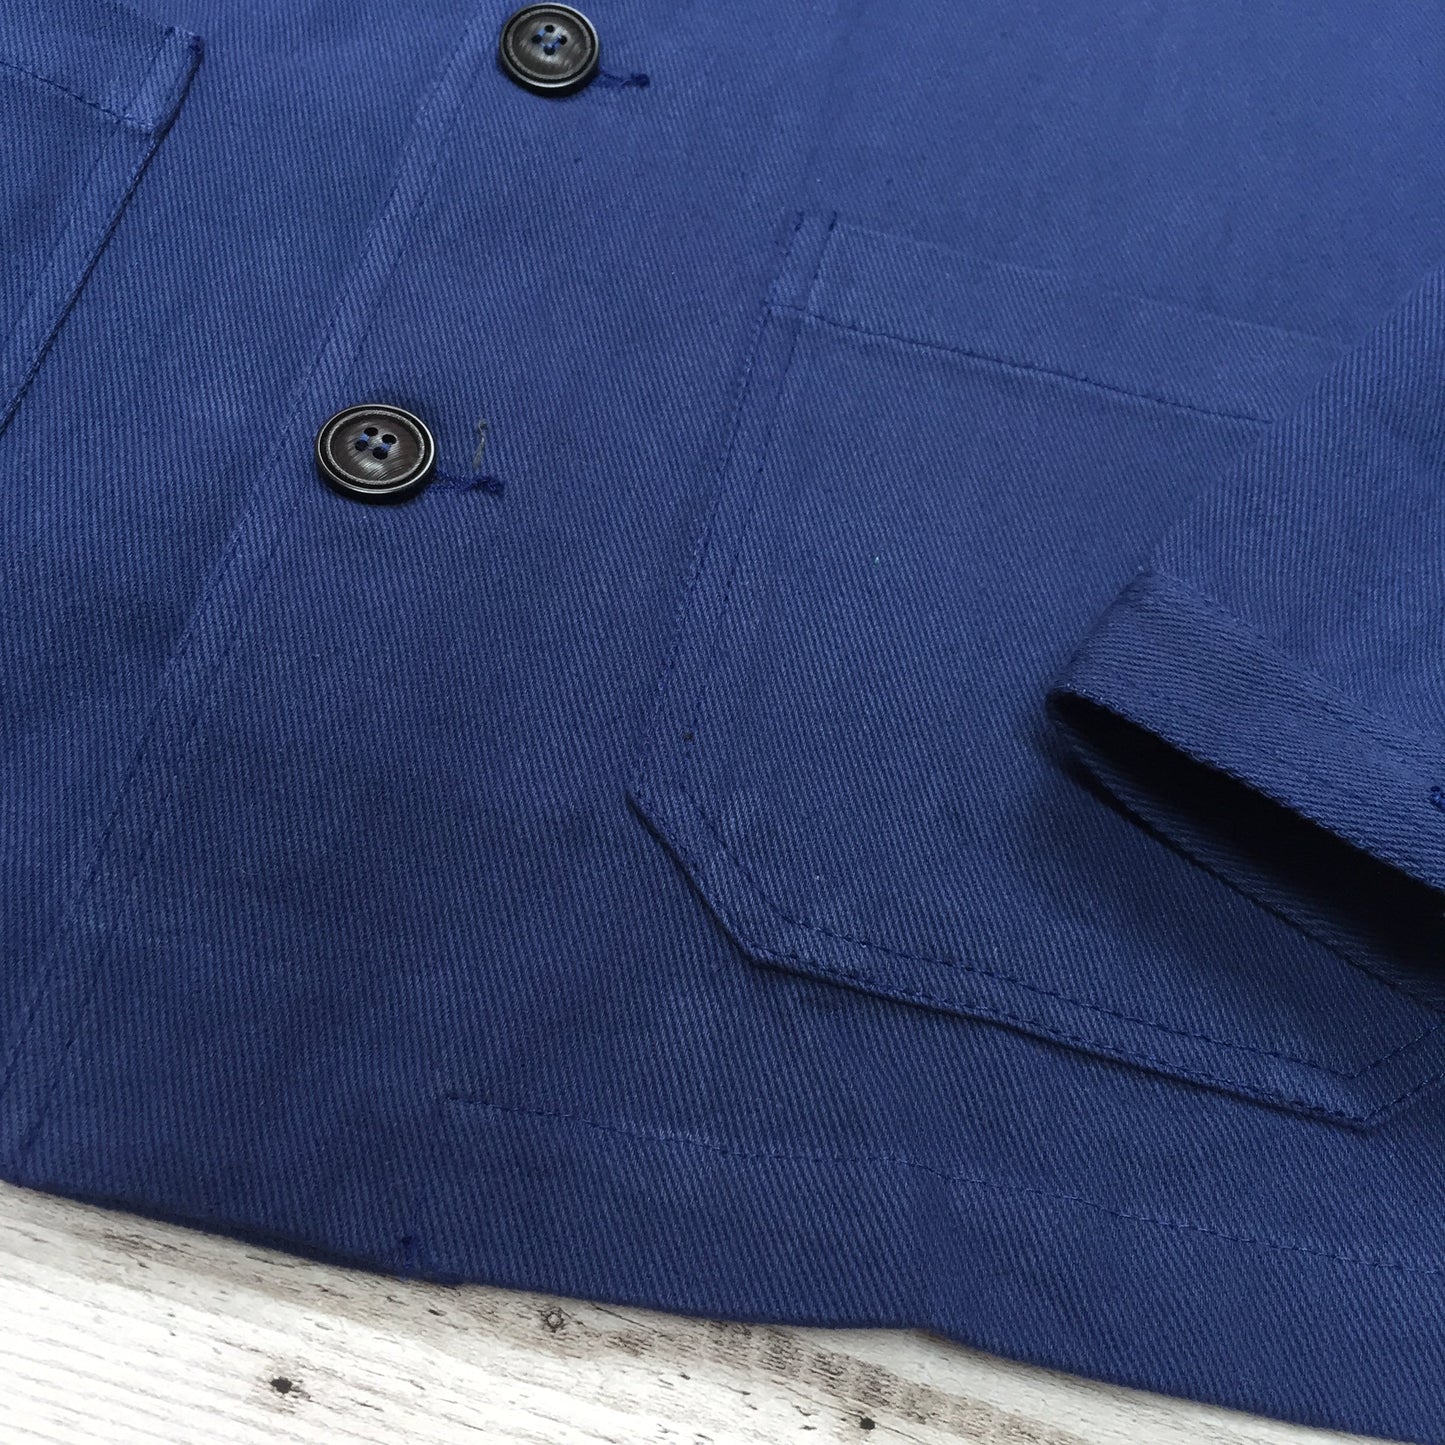 French Cotton Twill Chore Jacket Navy Blue